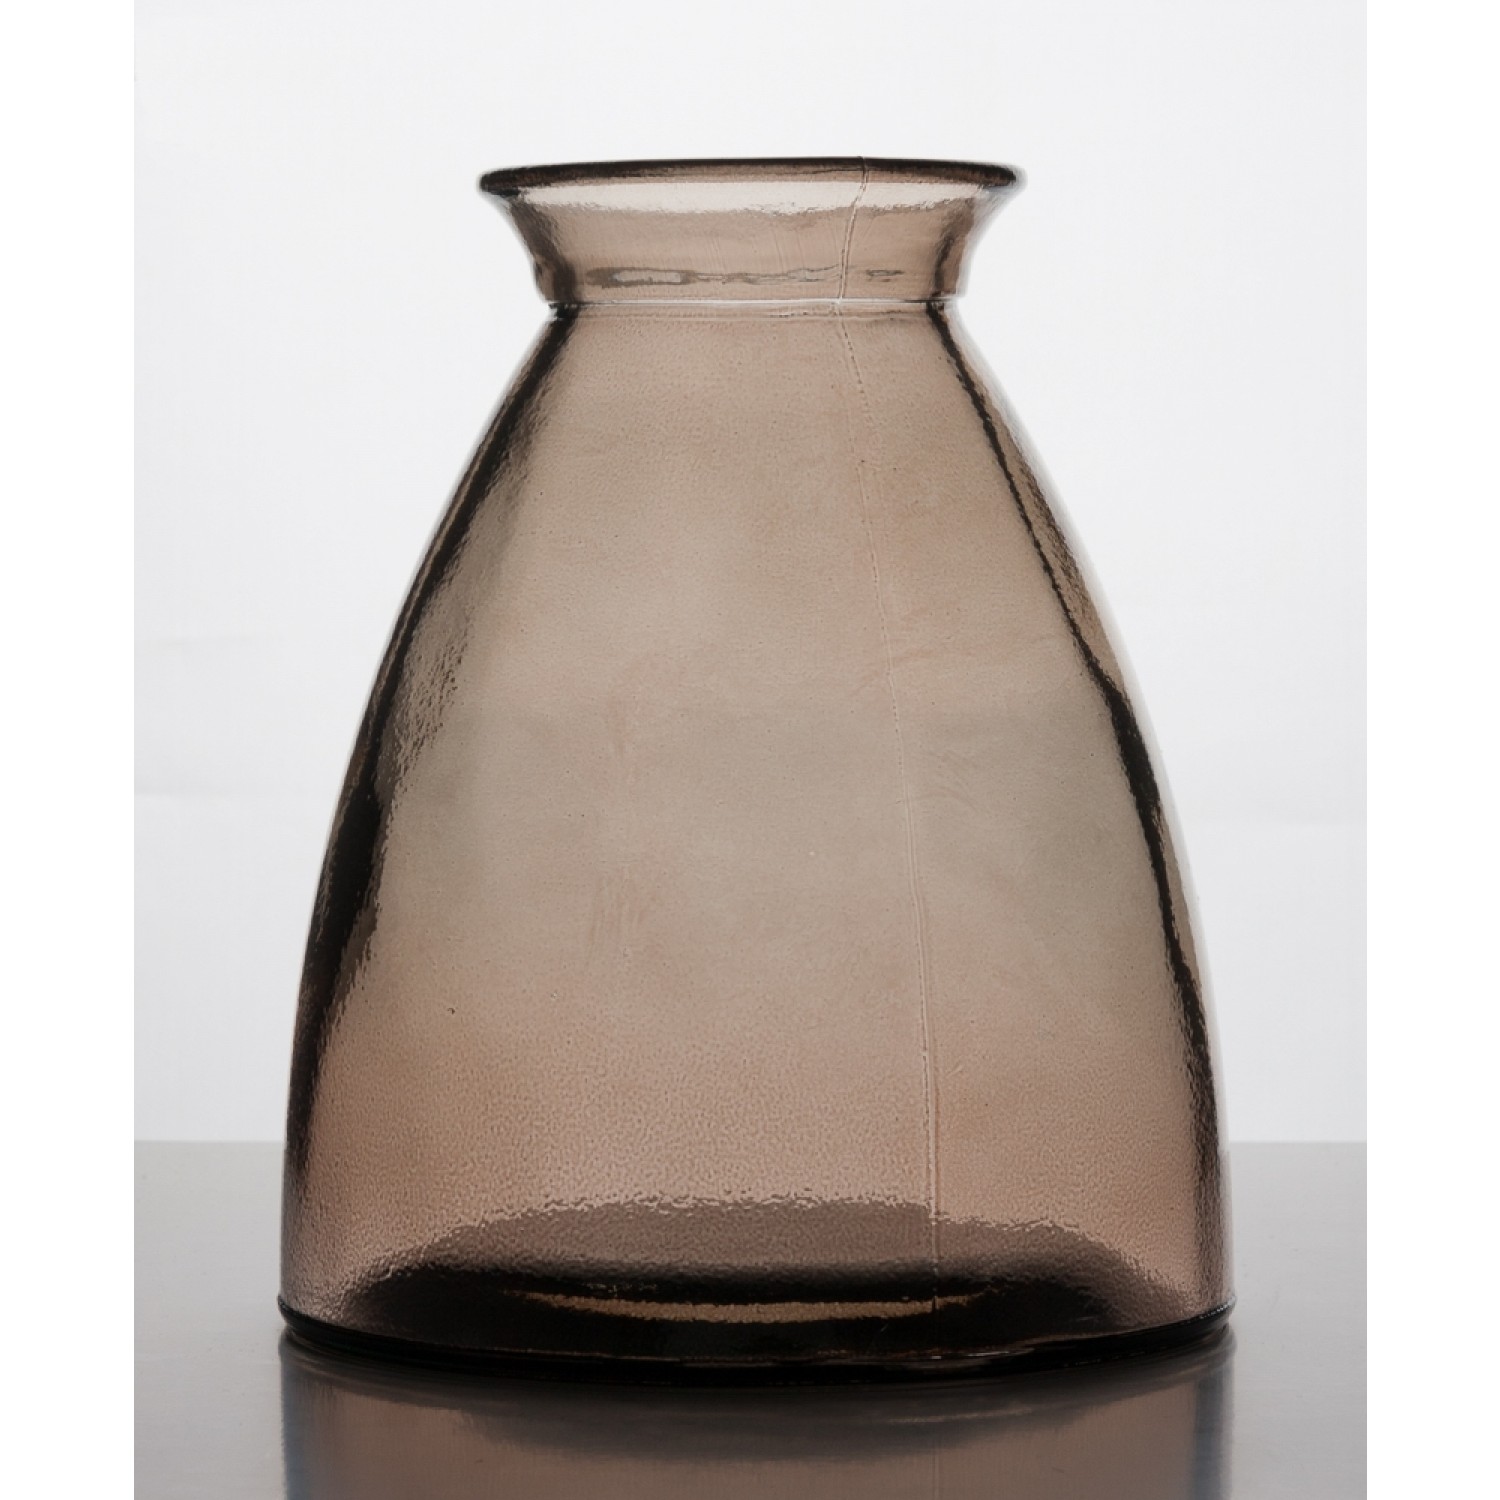 Braune Tischvase aus 100% Altglas | Vidrios Reciclados San Miguel